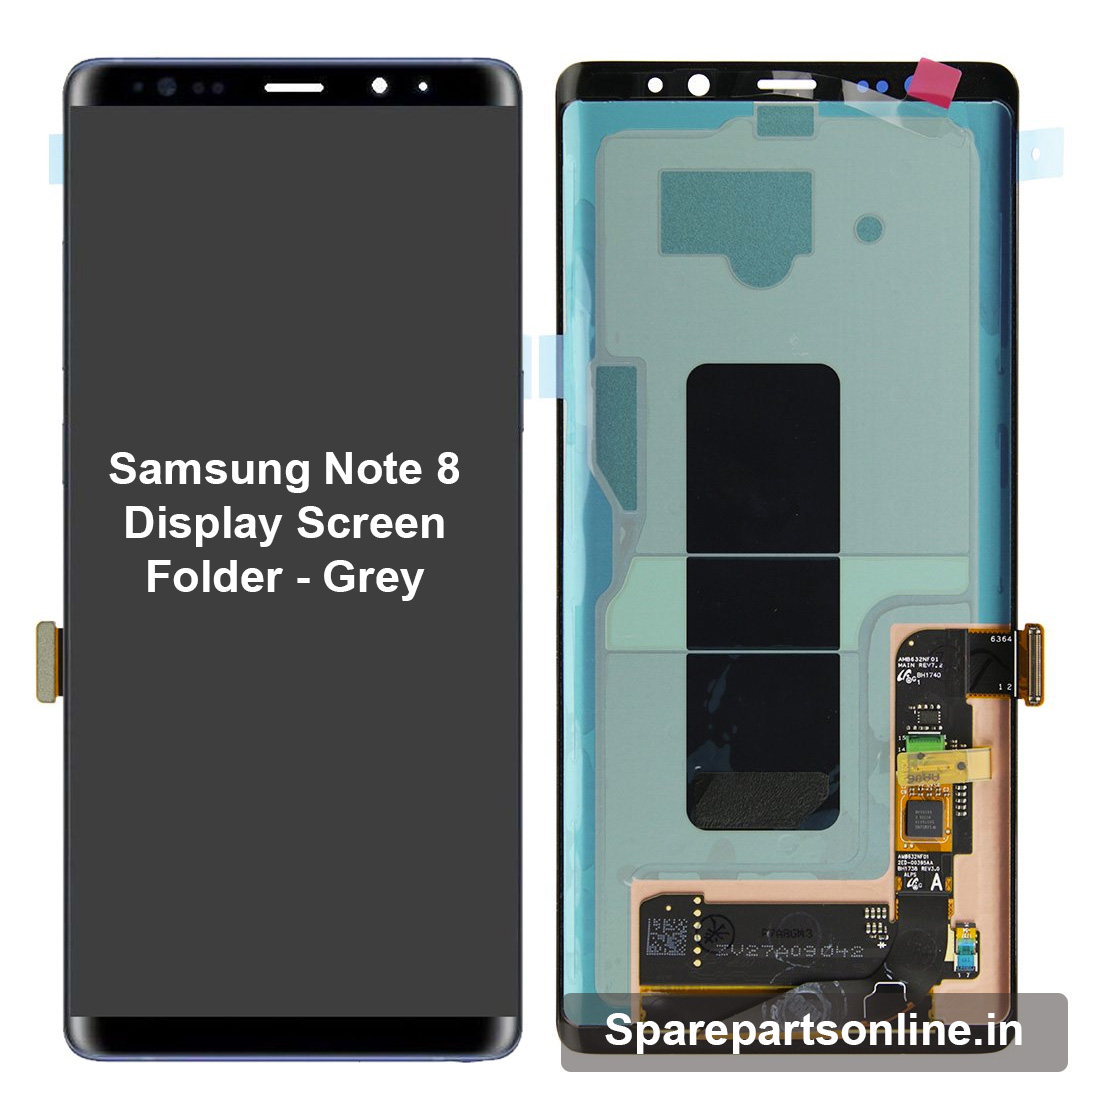 samsung-note8-display-lcd-screen-folder-grey